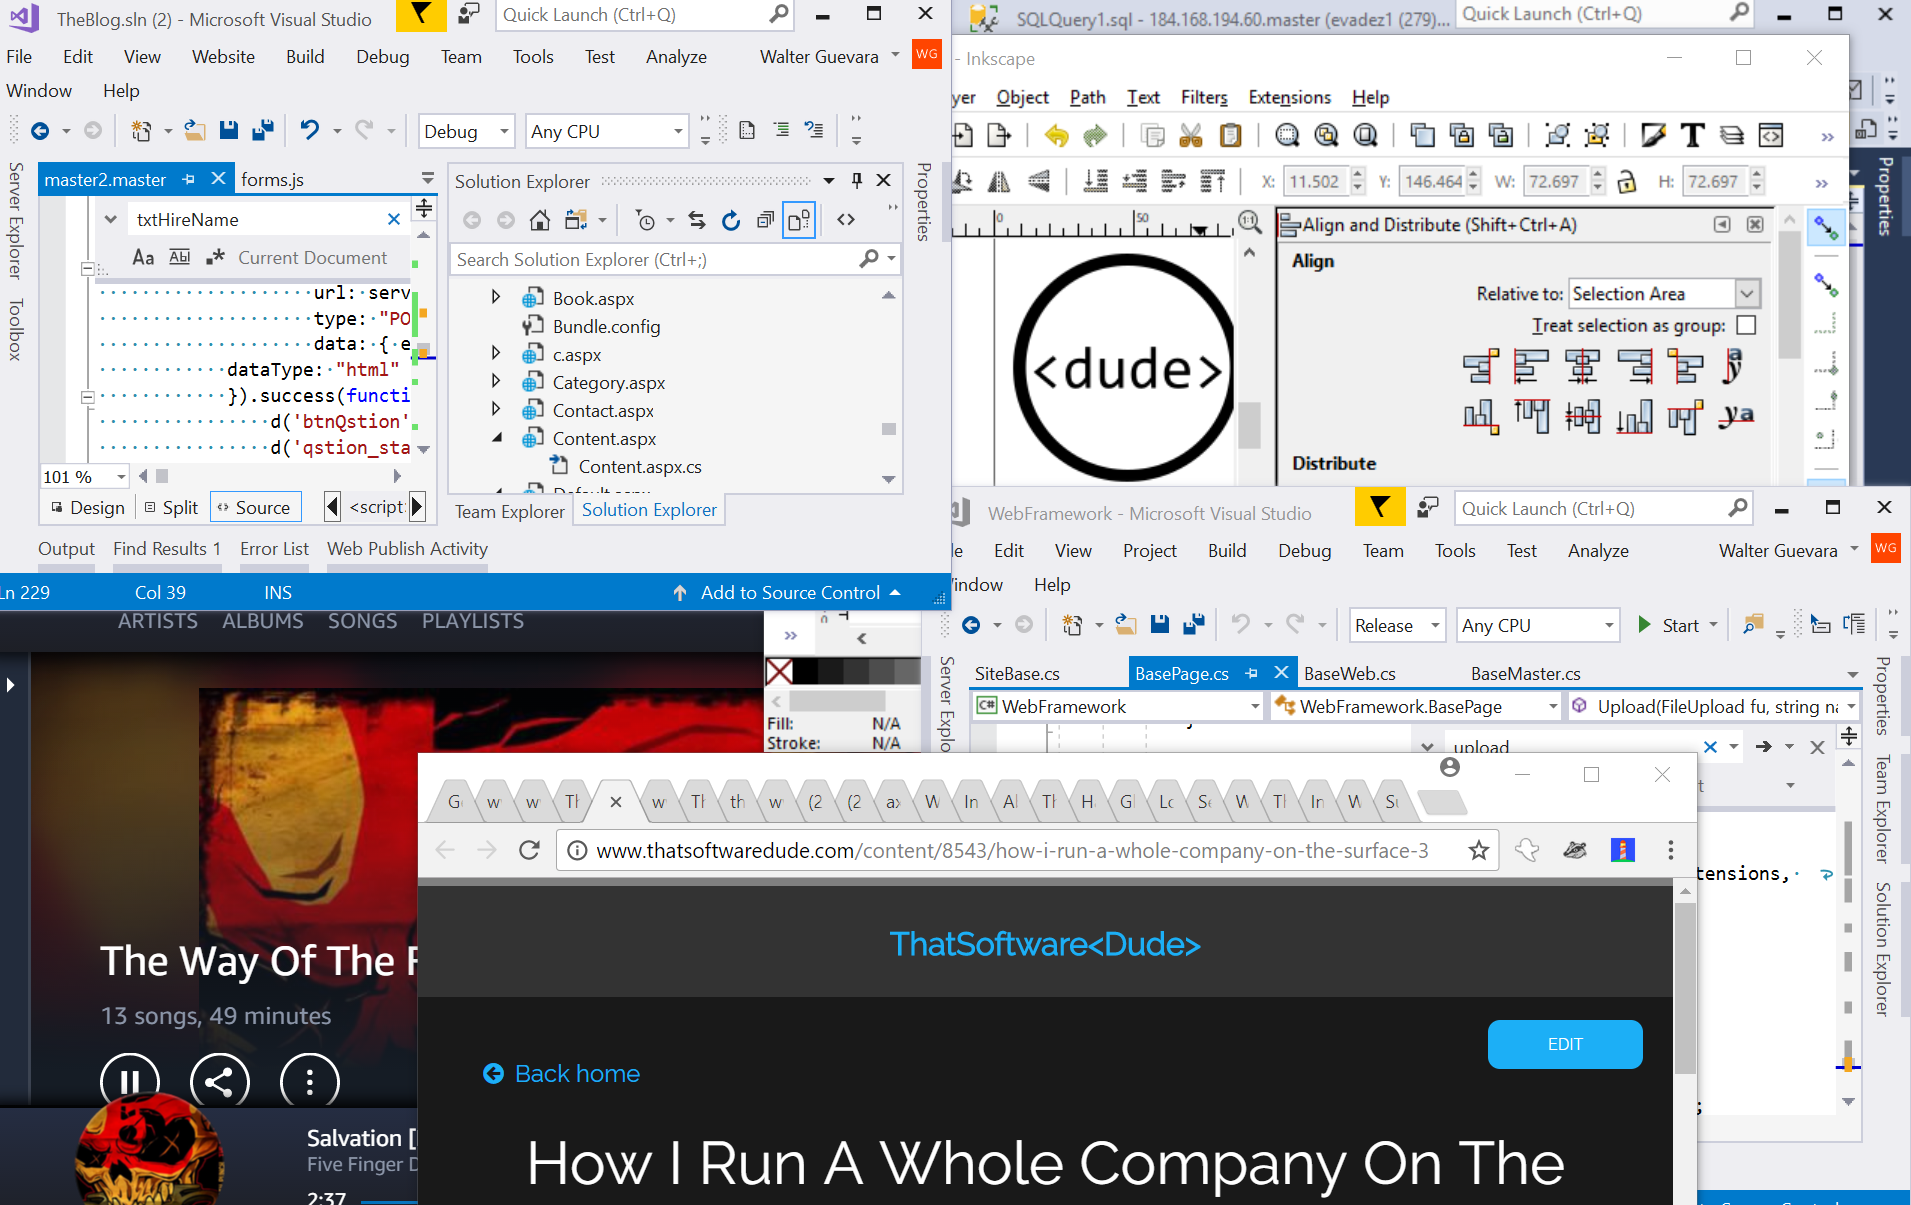 How I Run A Whole Company On The Surface 3